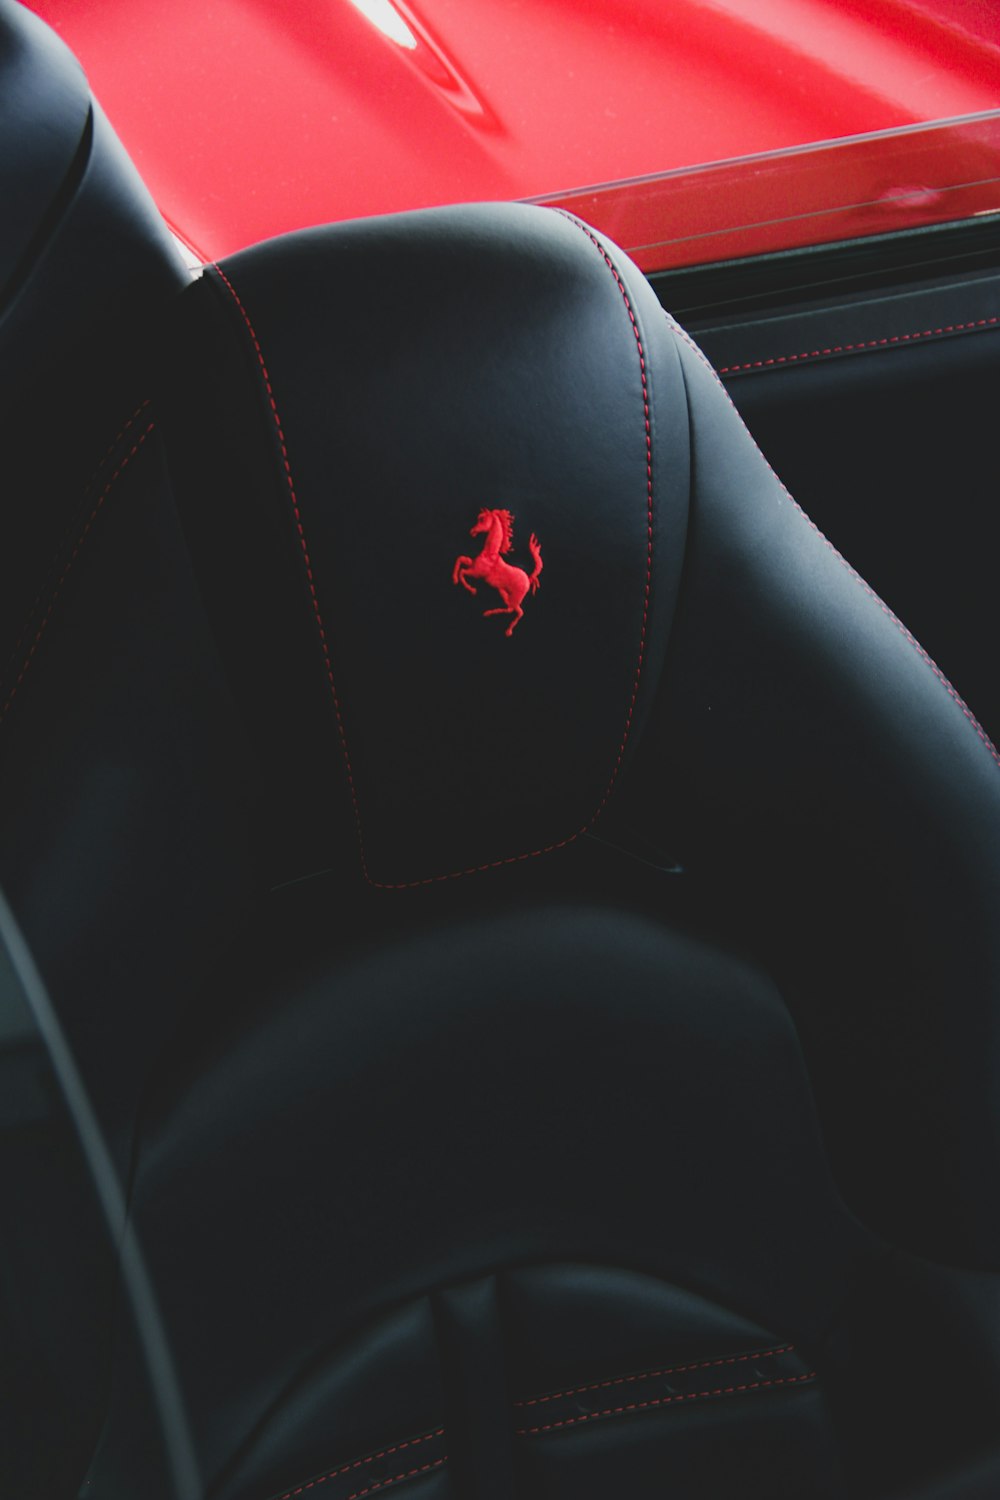 black Ferrari leather seat photo – Free Ferrari Image on Unsplash